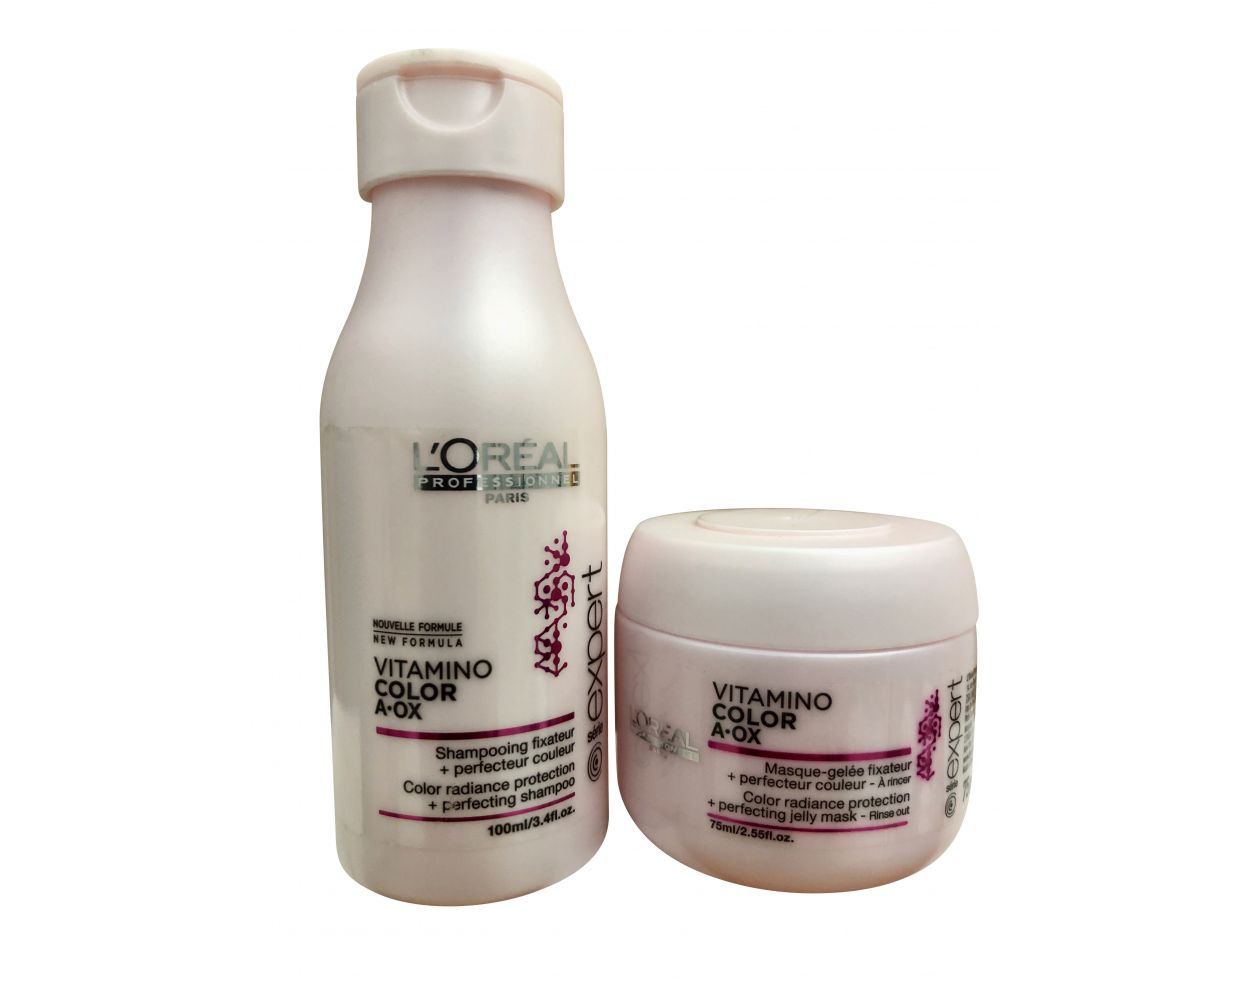 L'Oreal Vitamino Color A-OX Shampoo & Masque | Shampoo -